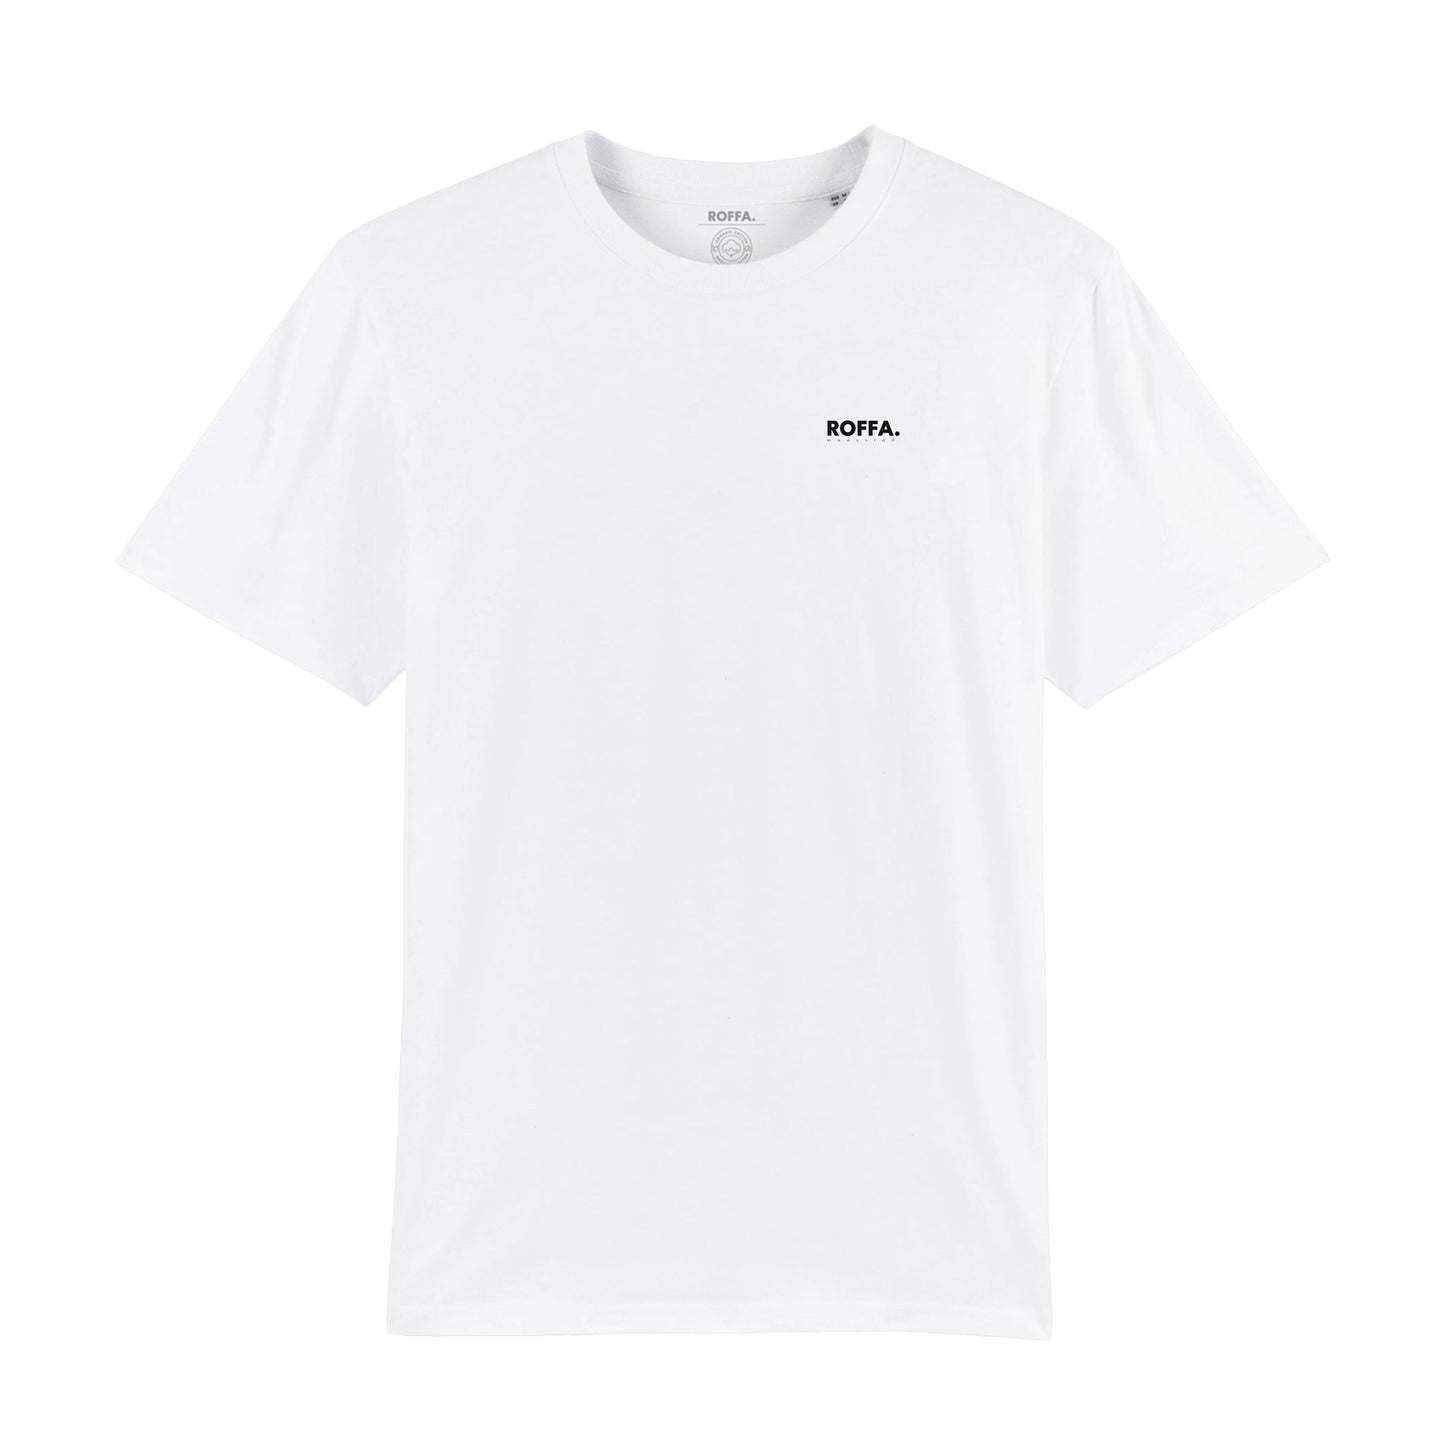 Wit t-shirt met Roffa en Rotterdam logo